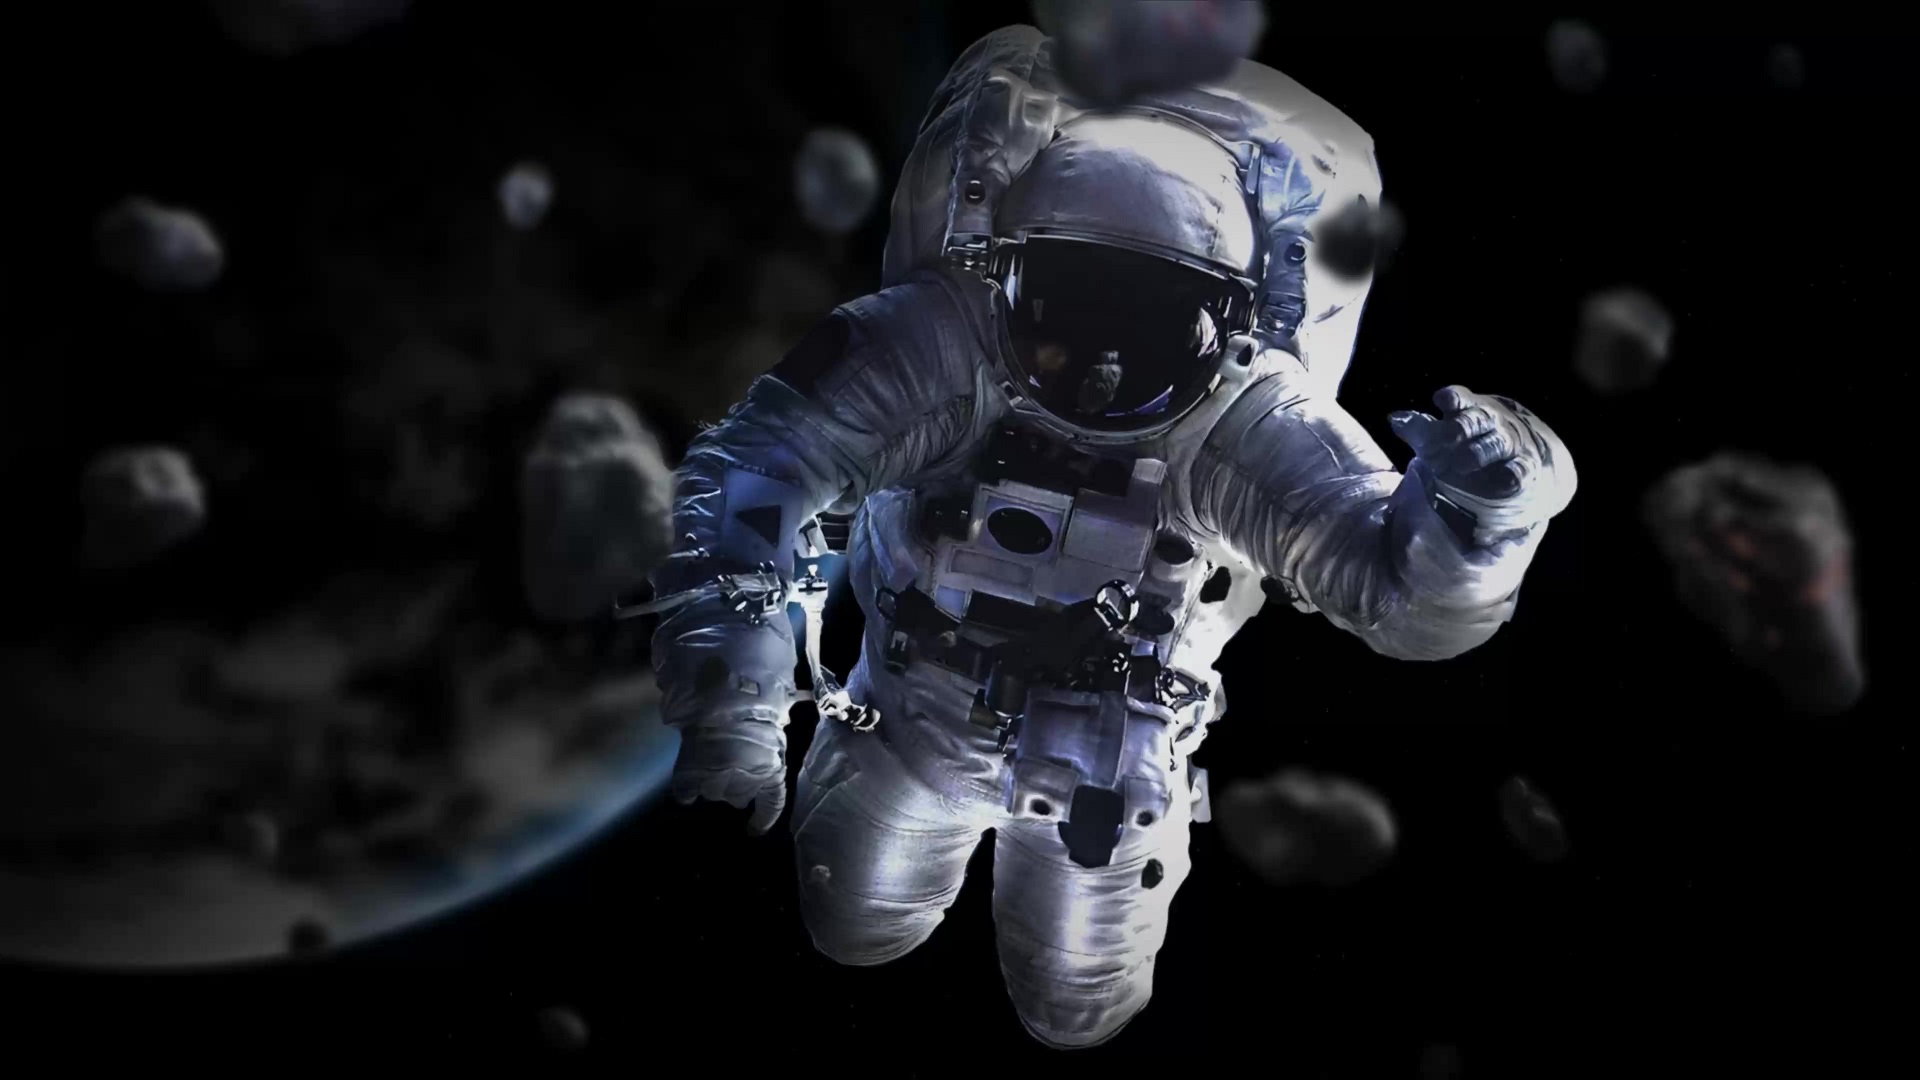 Steam WorkshopFloating In Space  No Astronaut Version  by Visualdon 4K